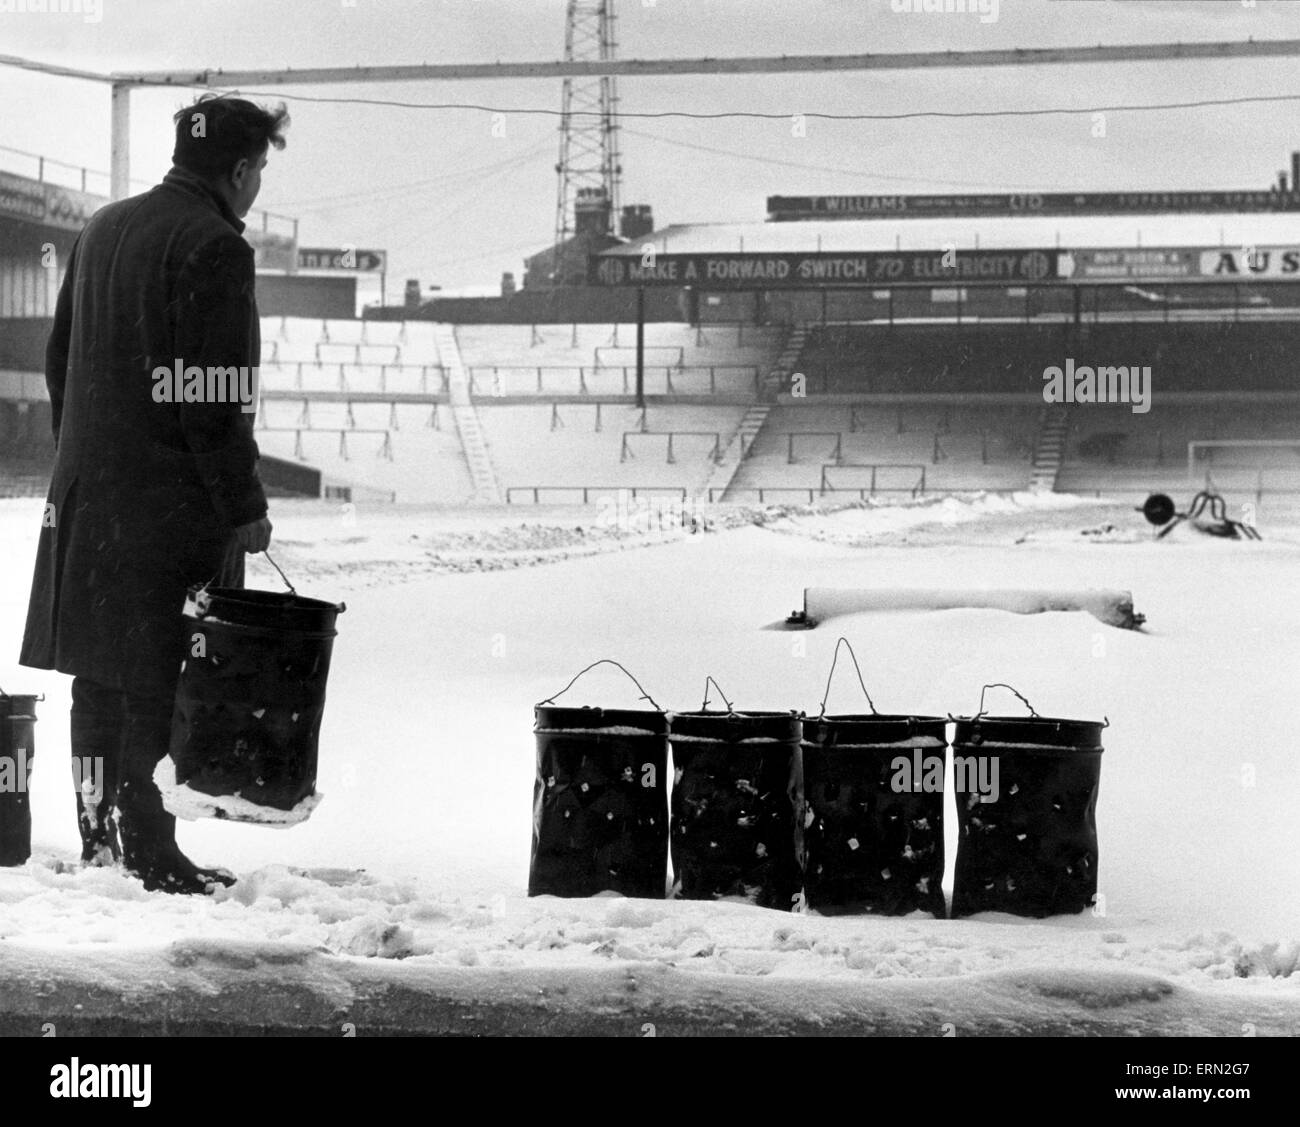 Birmingham City Ground St Andrews pitch cubiertos de nieve, de enero de 1963. Foto de stock